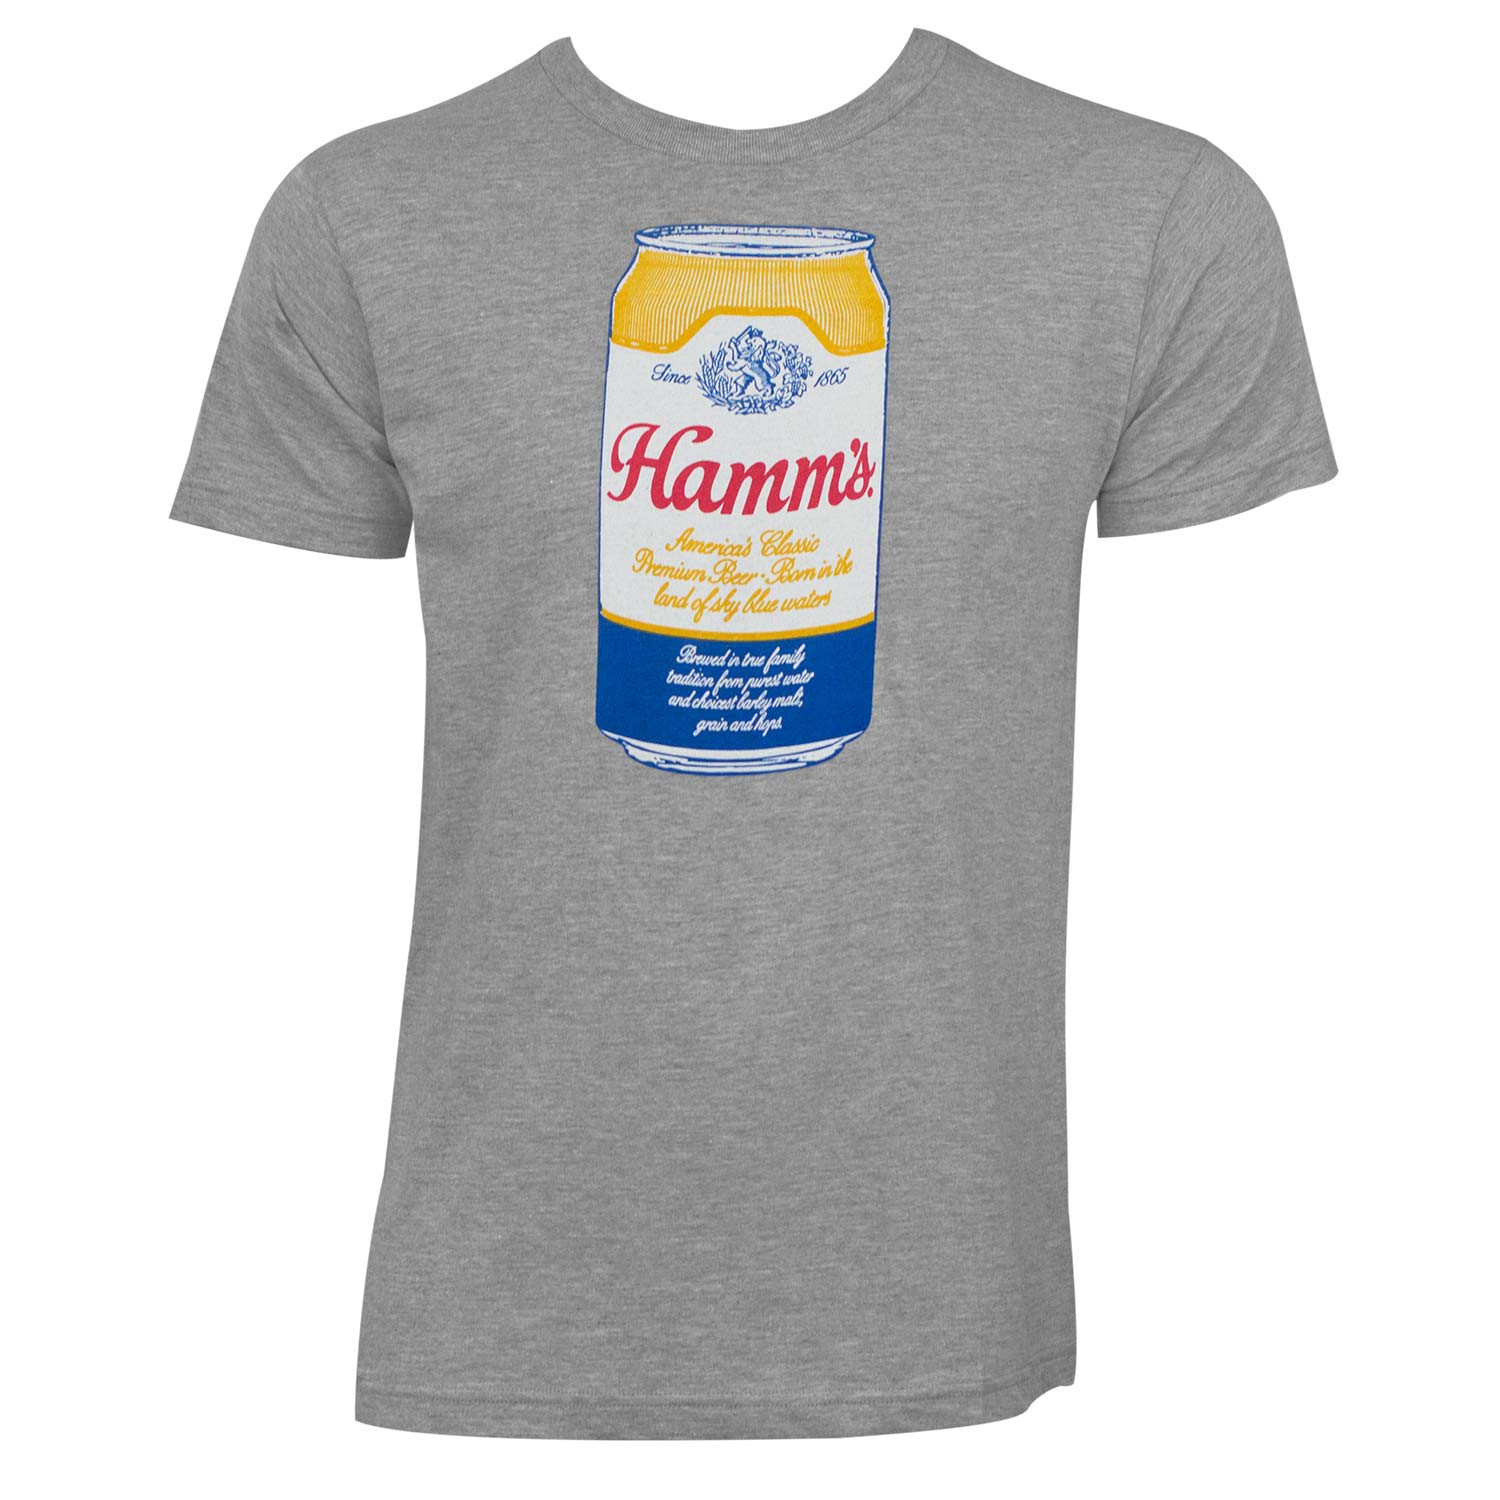 Hamm's Heather Grey Men's Can Tee Shirt